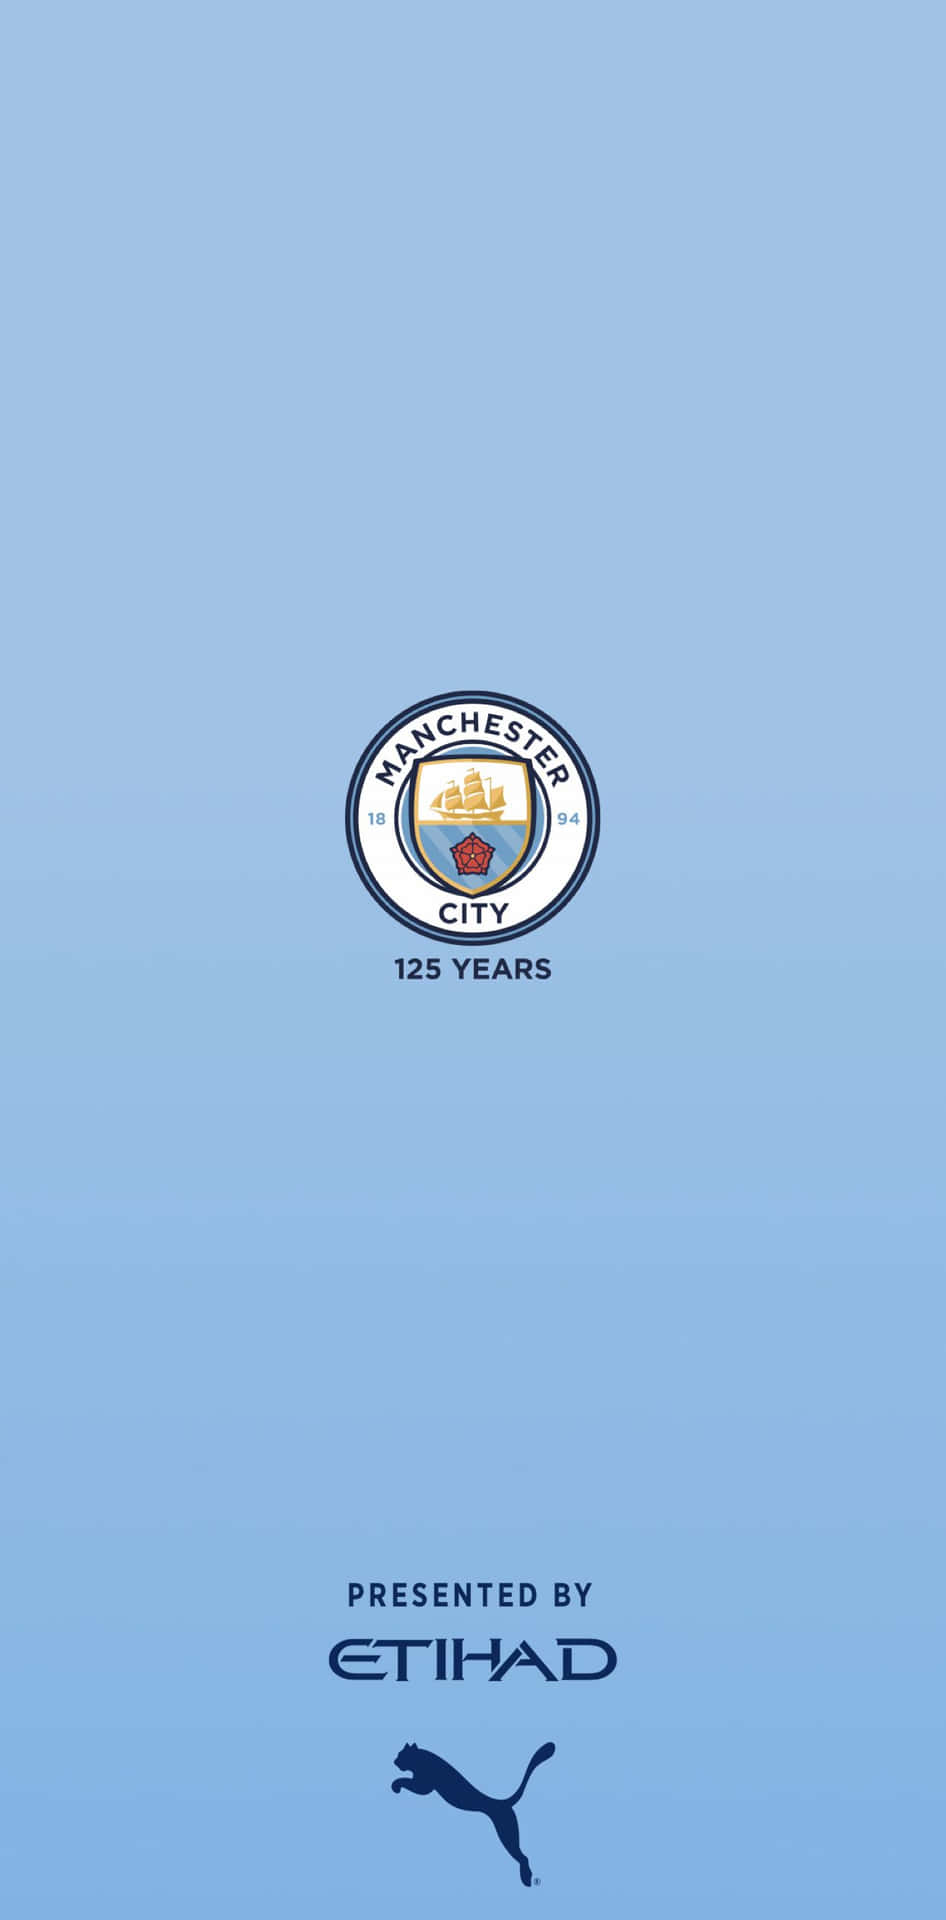 Dieperfekte Ergänzung Für Einen Wahren Manchester City Football-enthusiasten - Ein Offizielles Manchester City Iphone Wallpaper